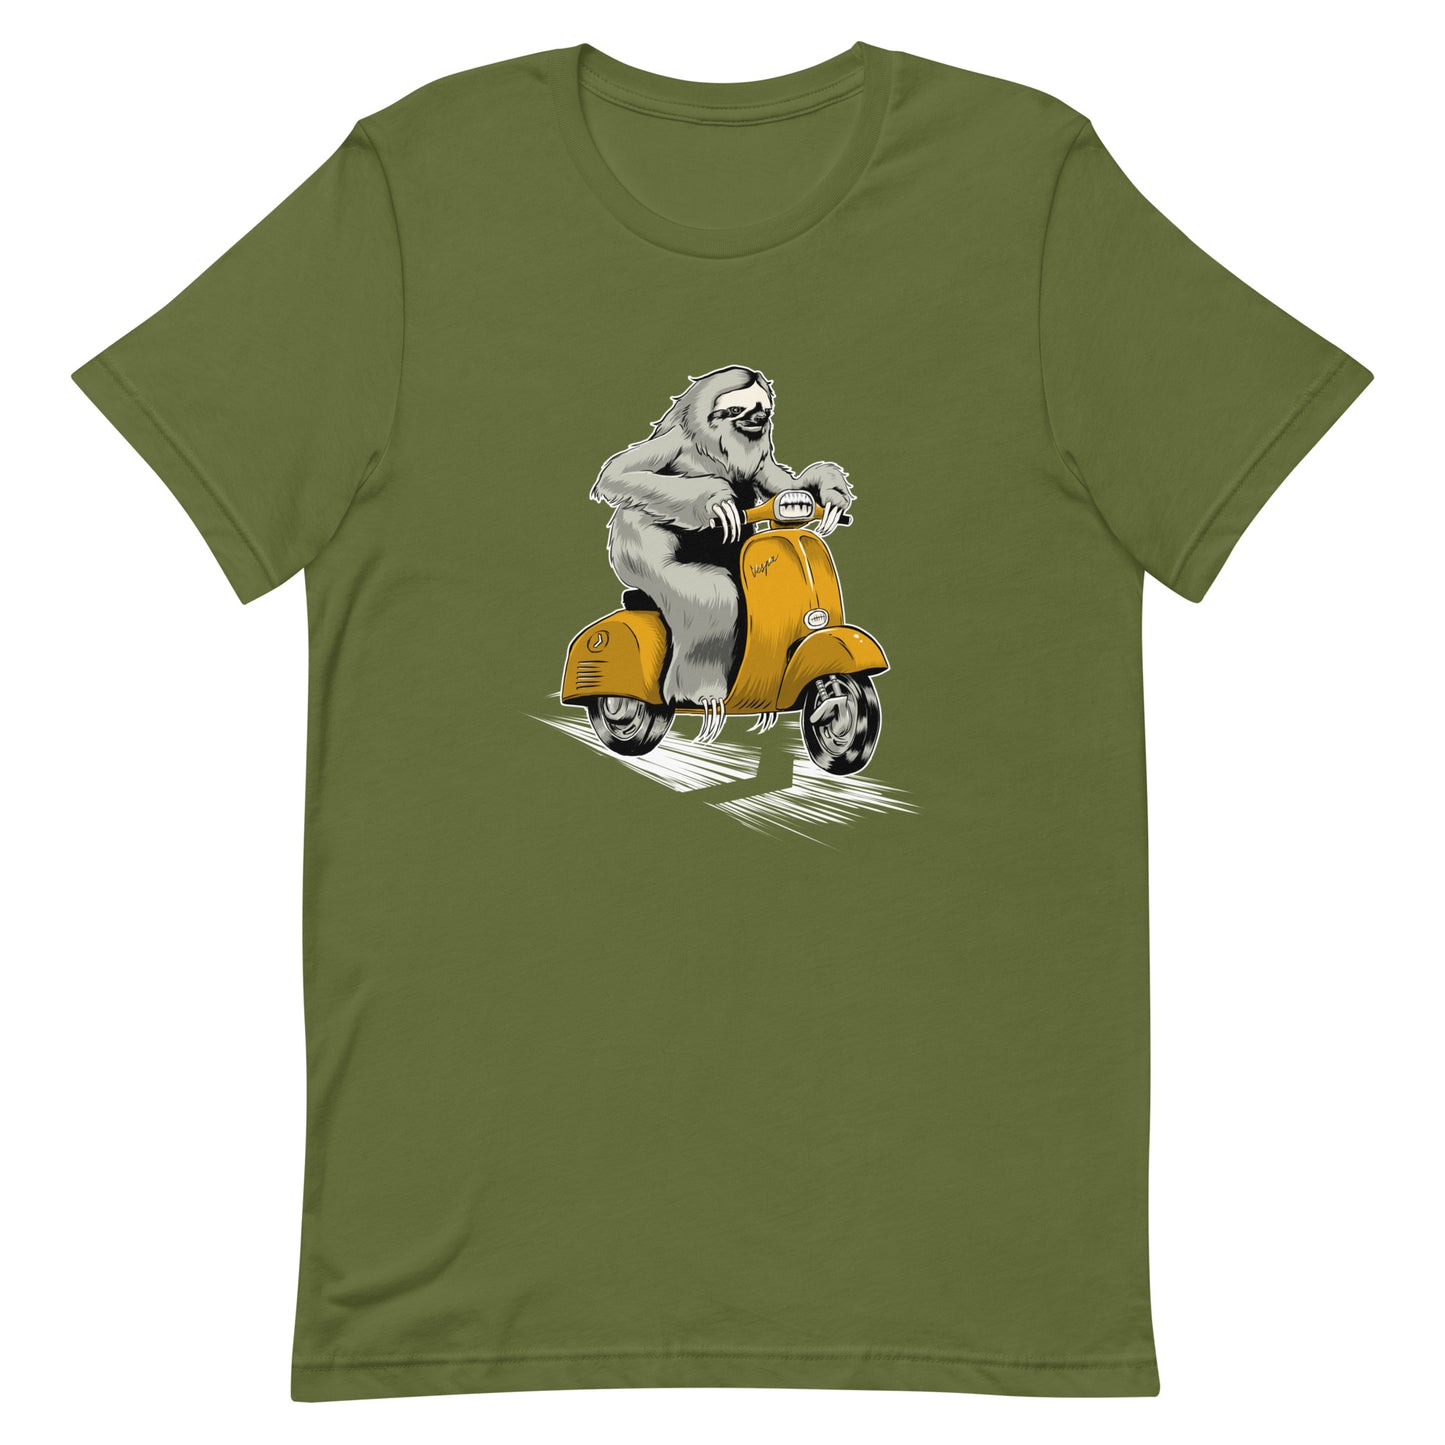 Slothy T-Shirt